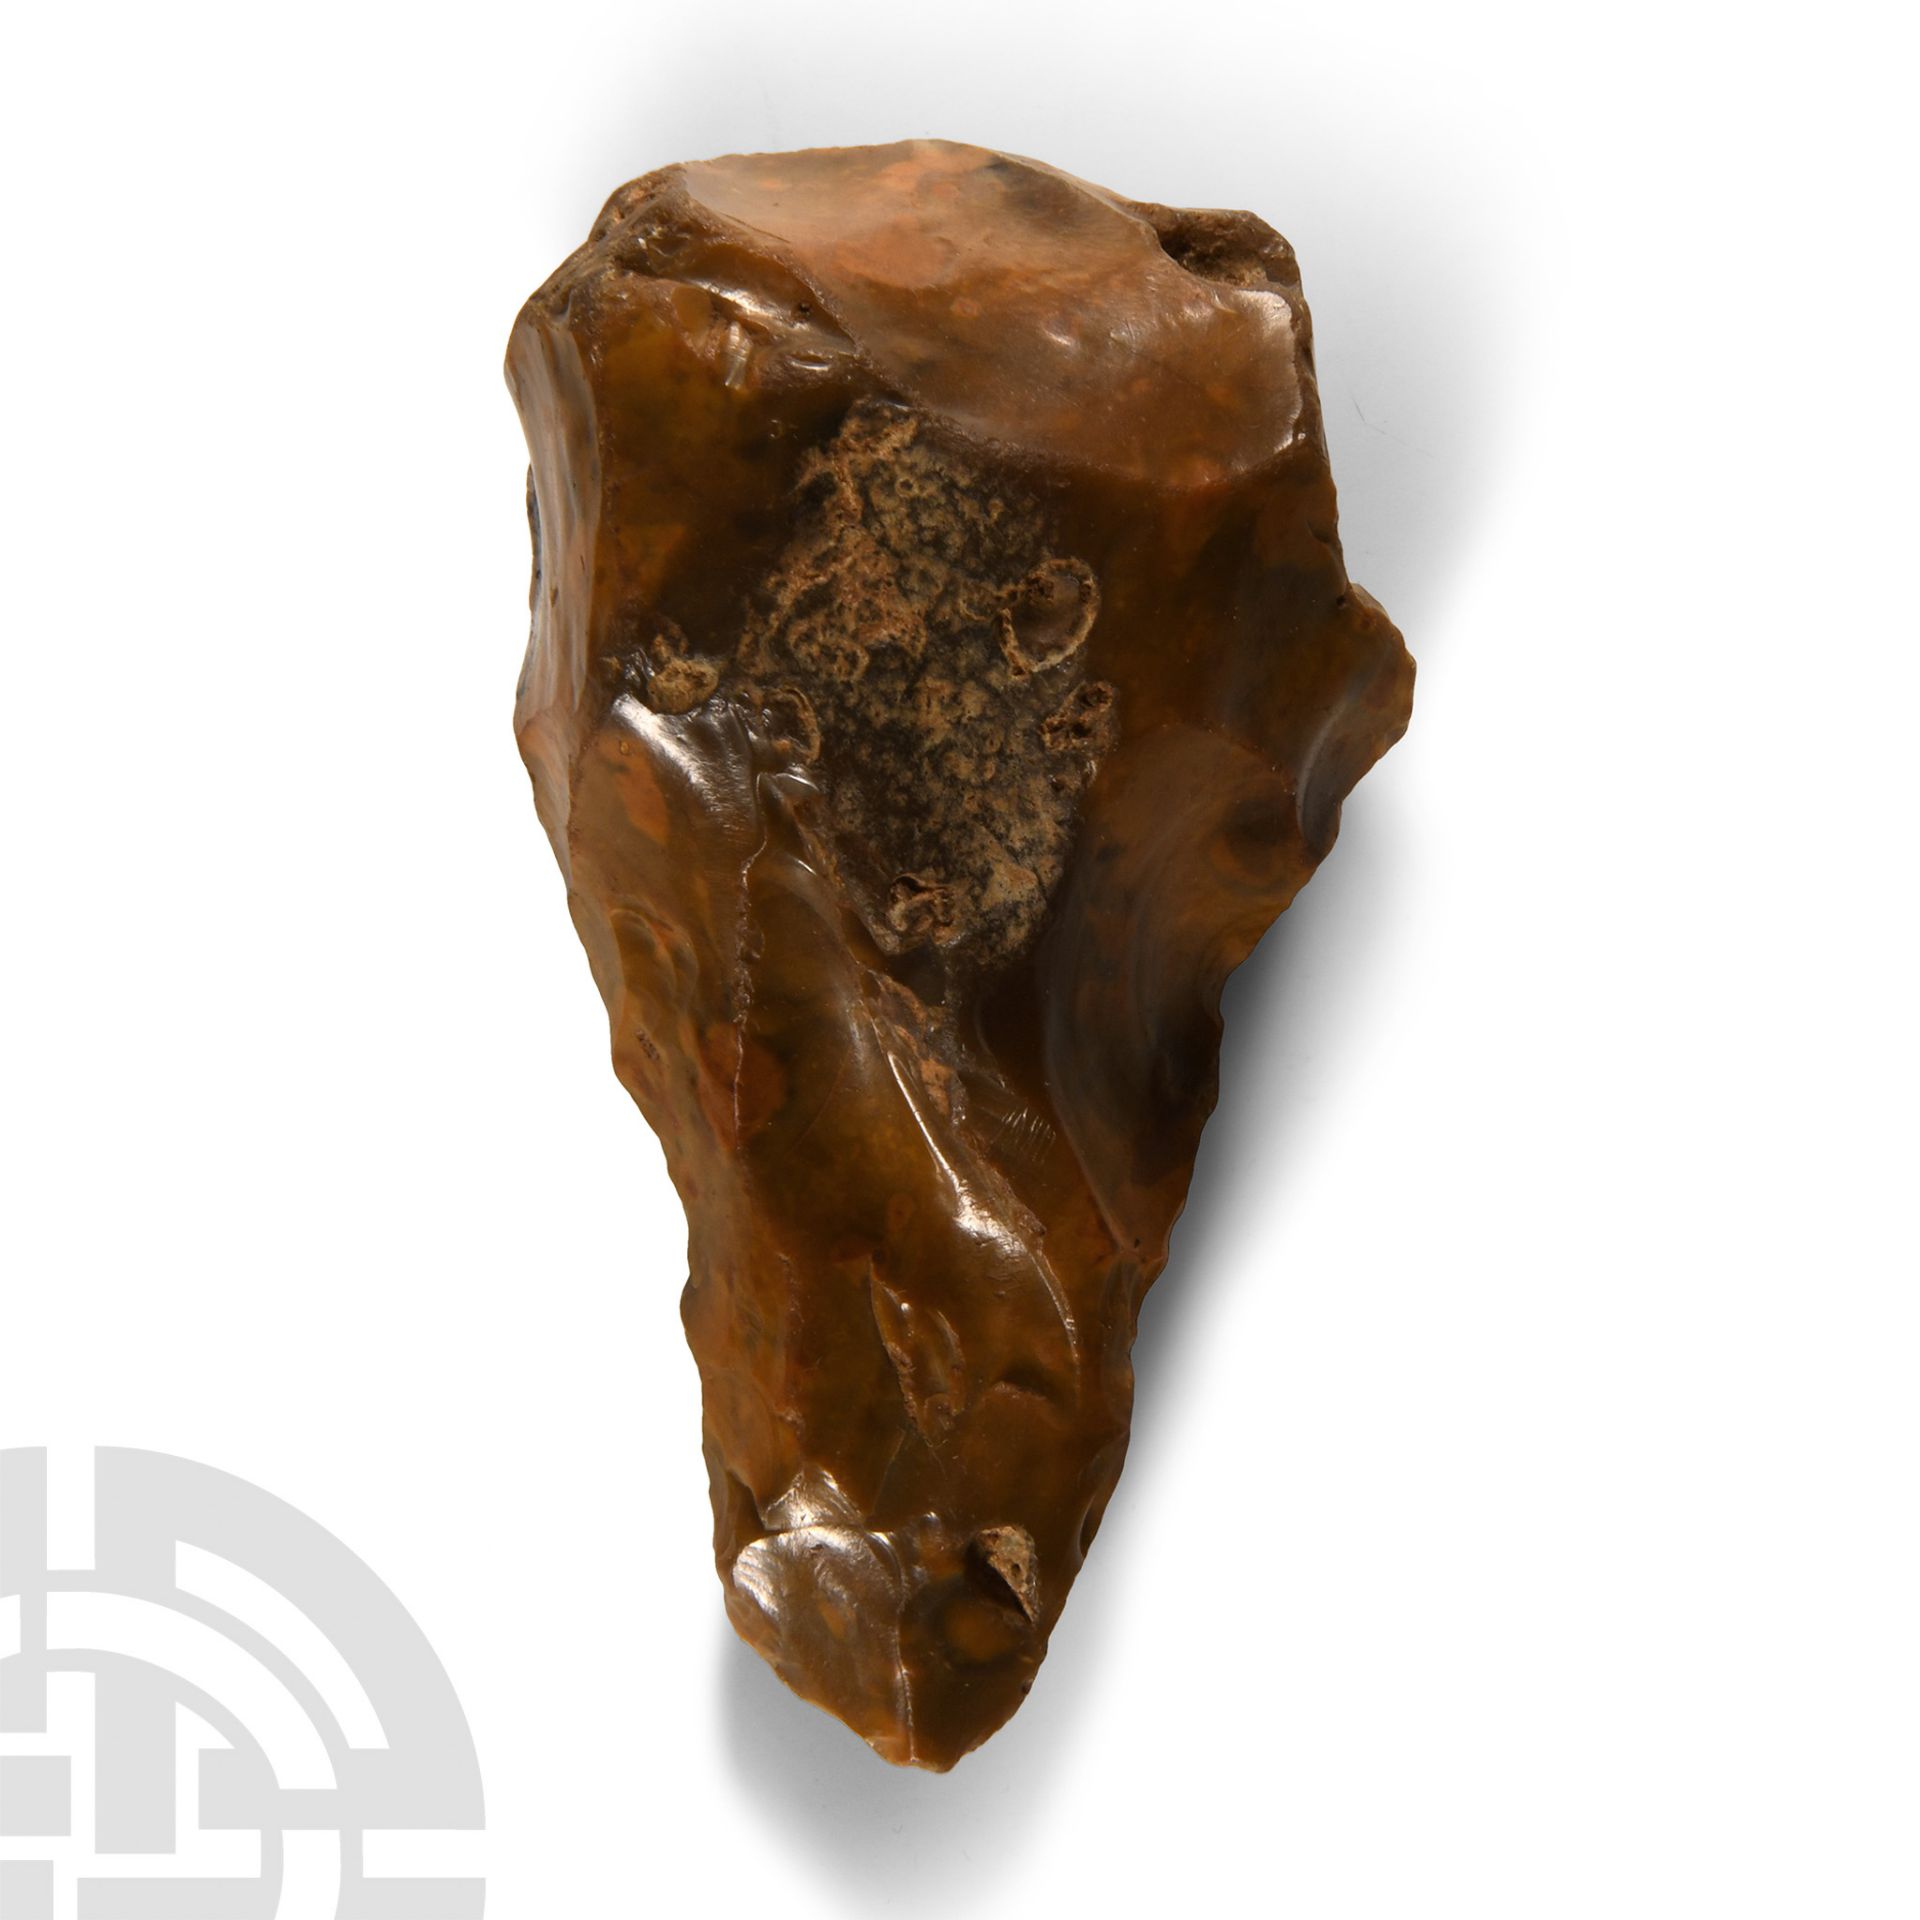 'The General Sir George Cockburn' Stone Age Classic British Teardrop-Shaped Knapped Flint Handaxe - Image 2 of 2